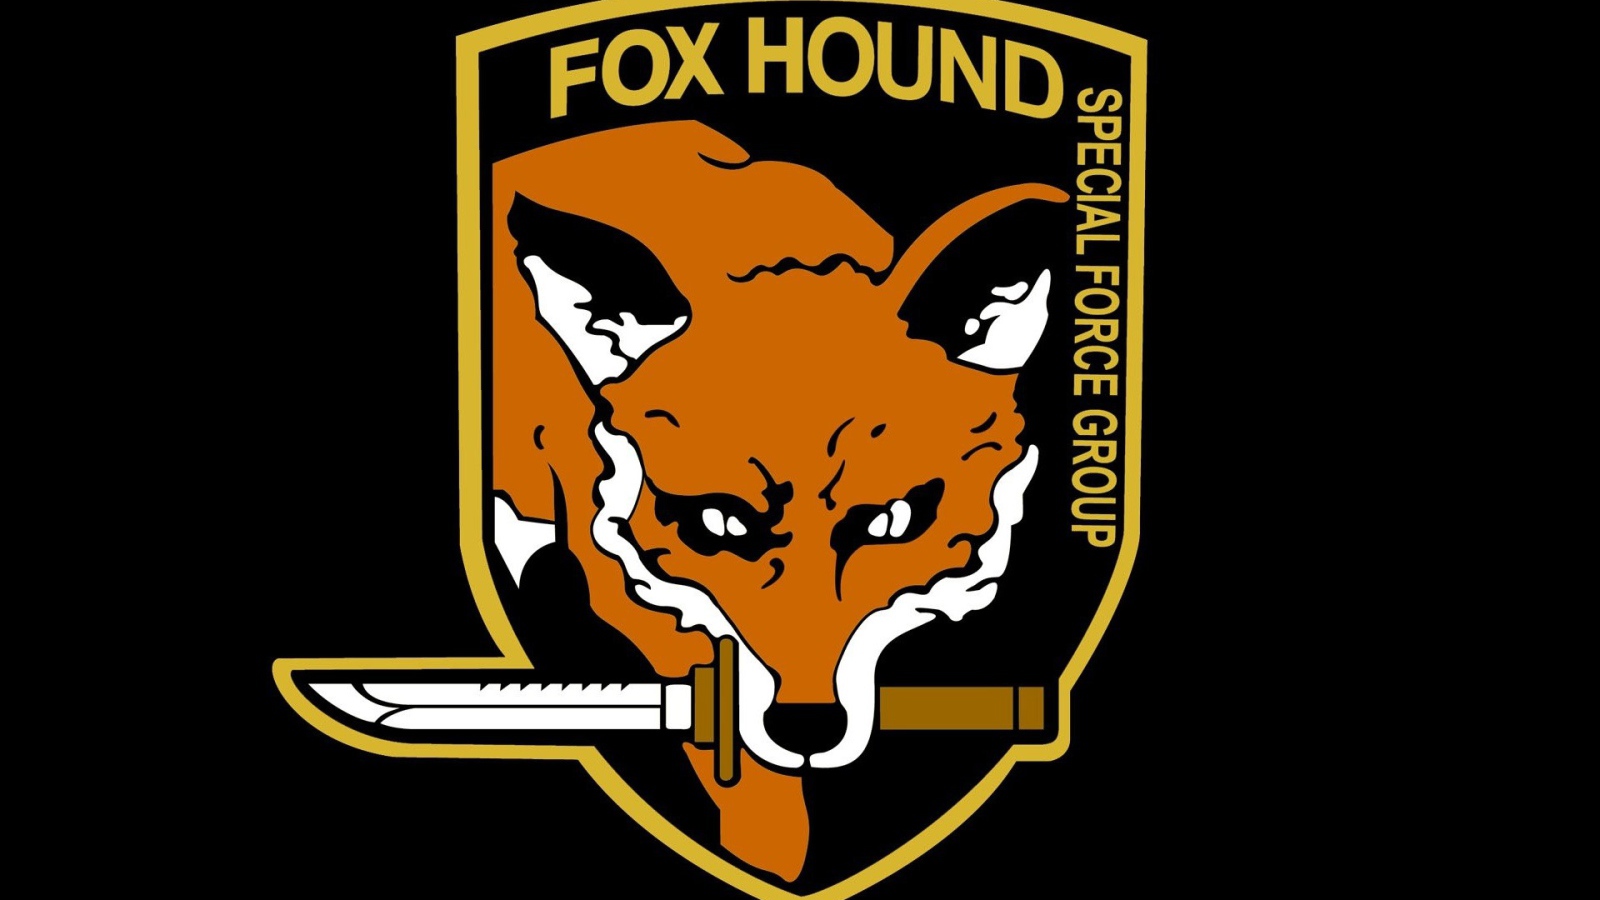 Fox hound. Foxhound. Foxhound обои. Metal Gear Solid 3 substance 500x500 icon.